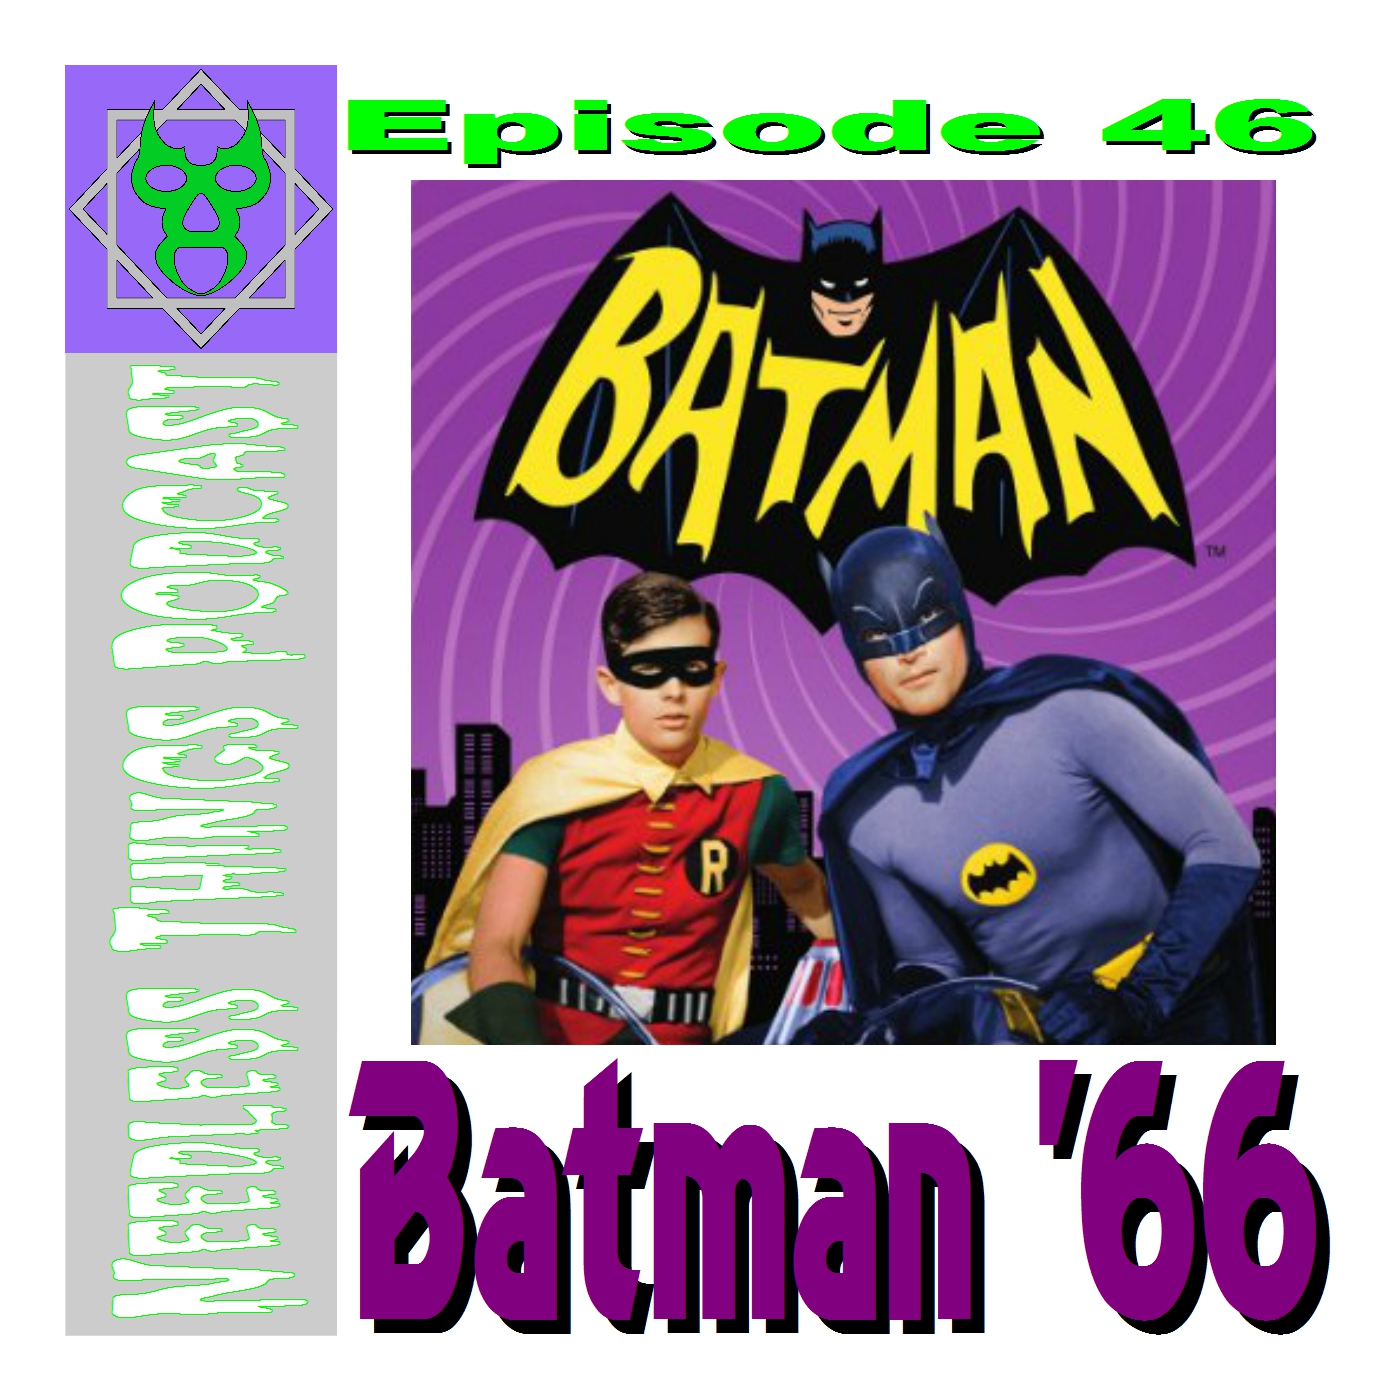 Needless Things Podcast 46 - Batman ‘66